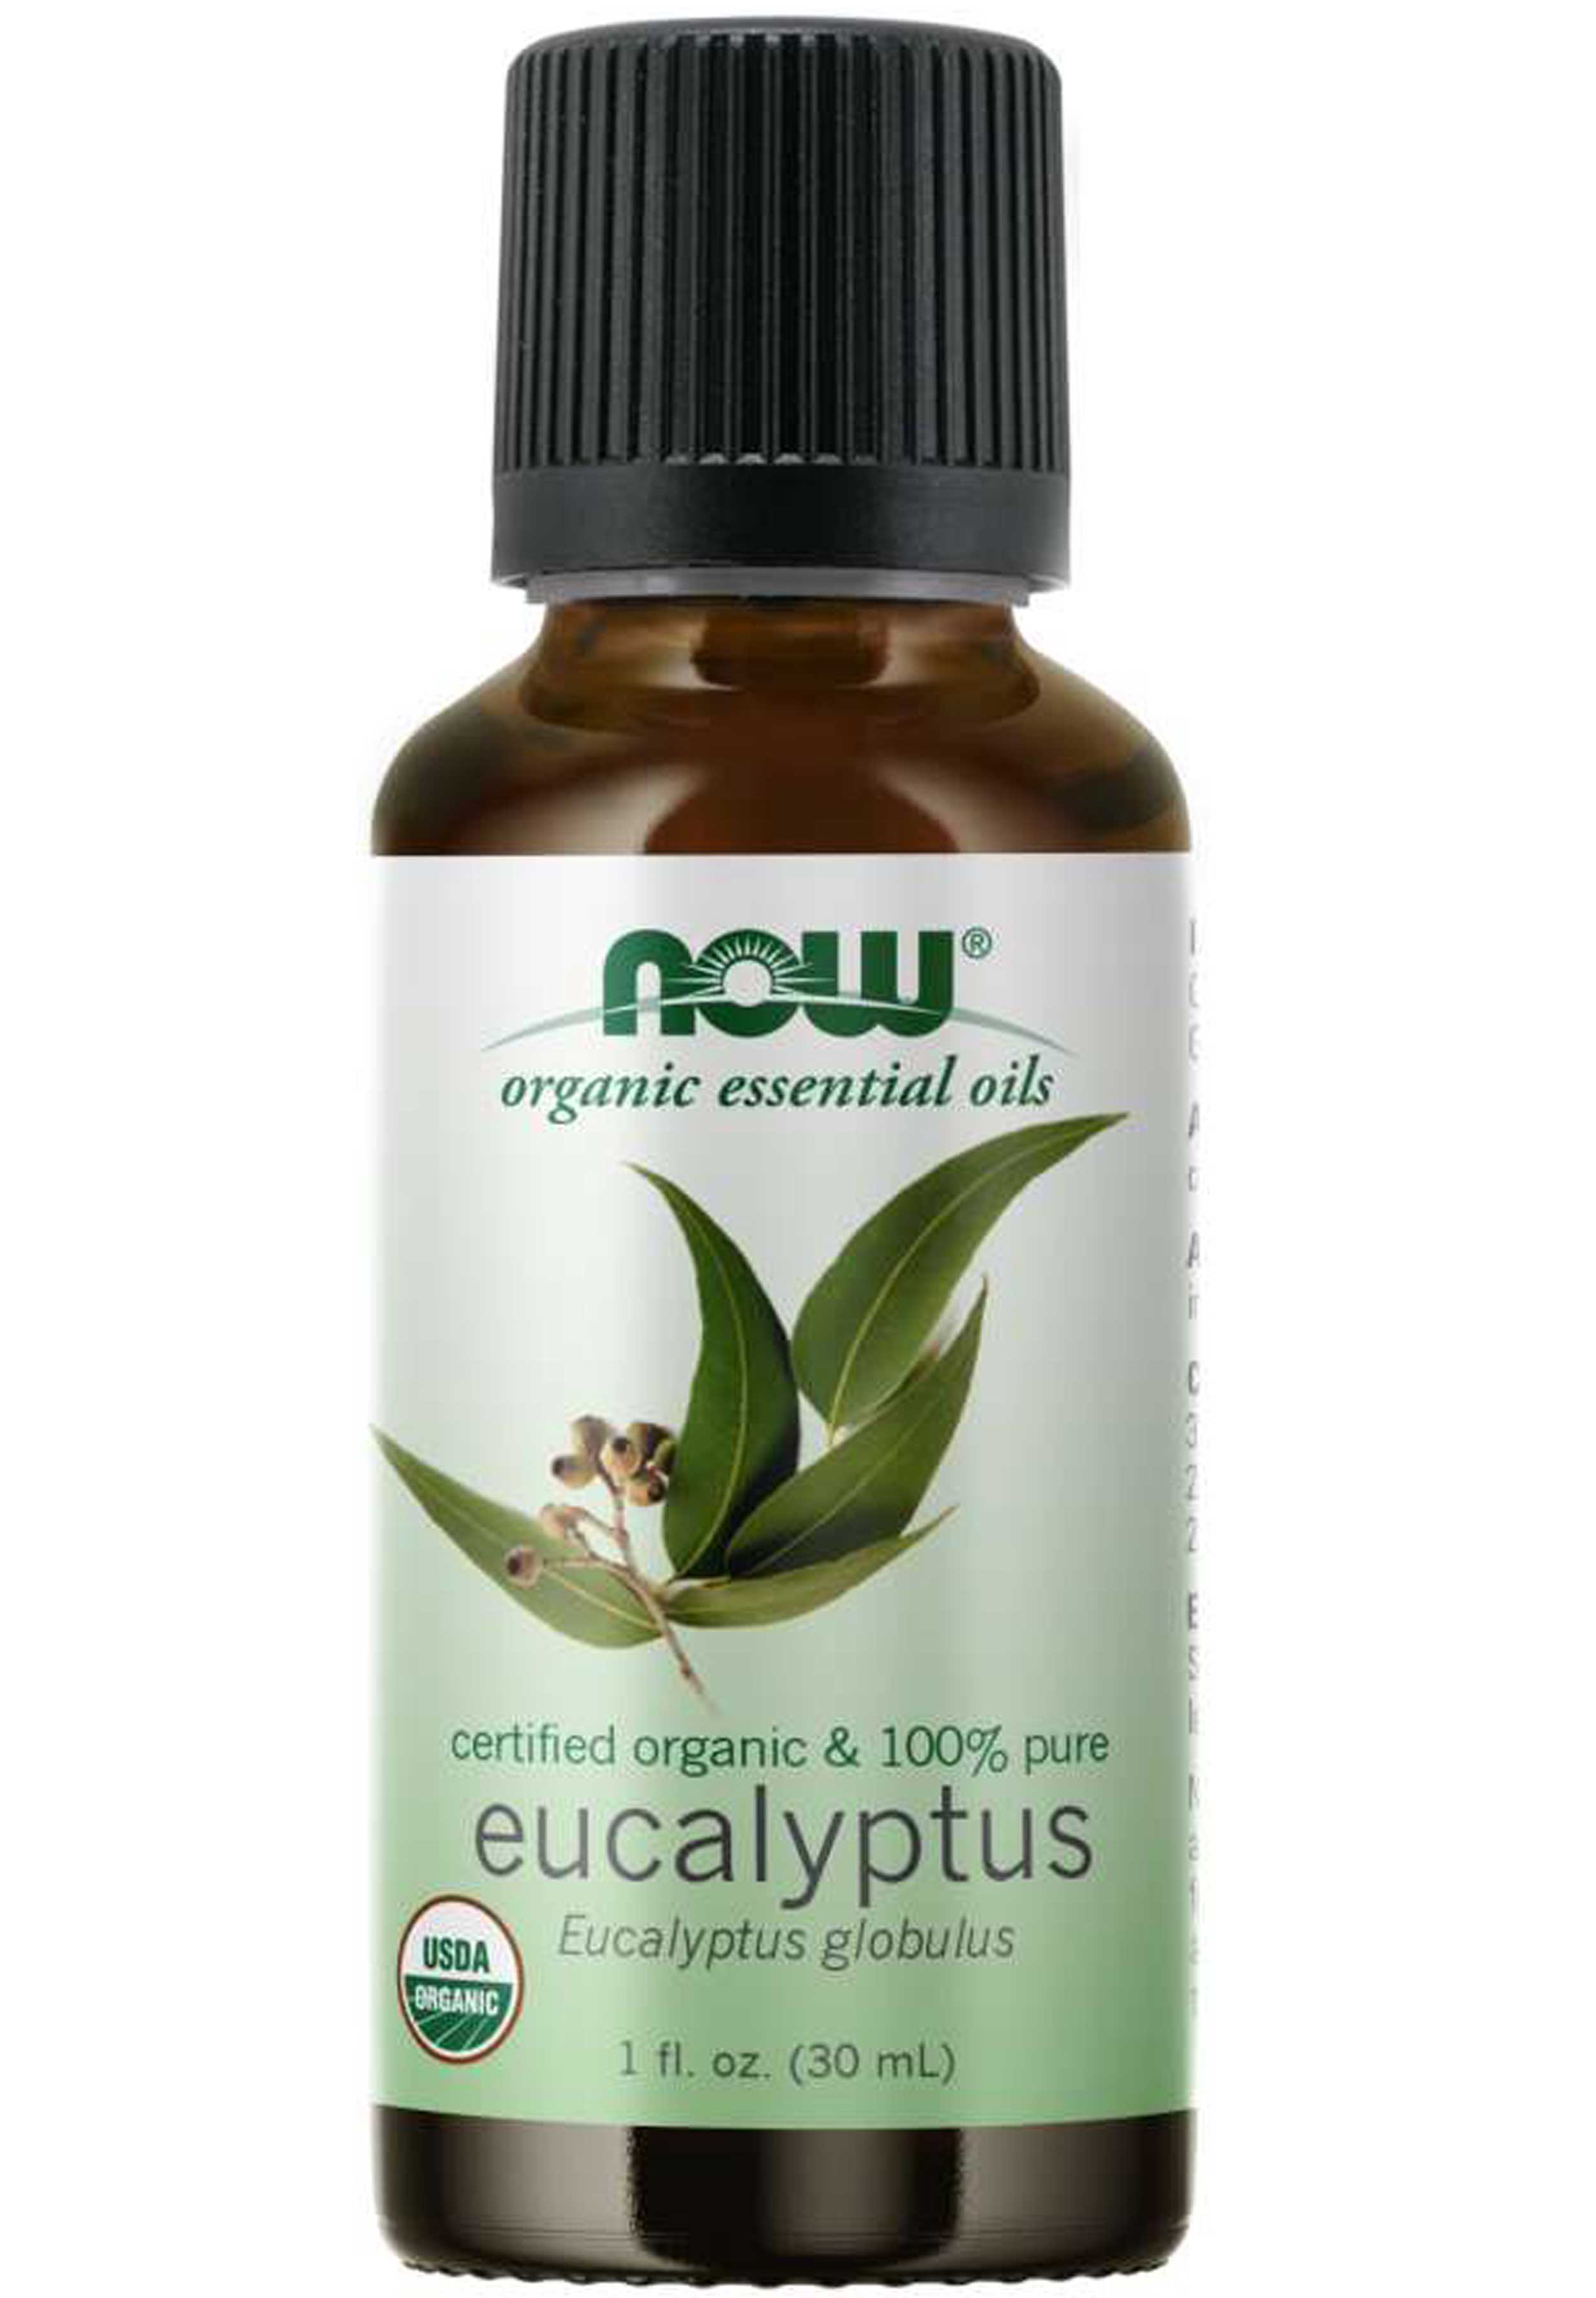 NOW Organic Essential Oils Eucalyptus Oil, Organic